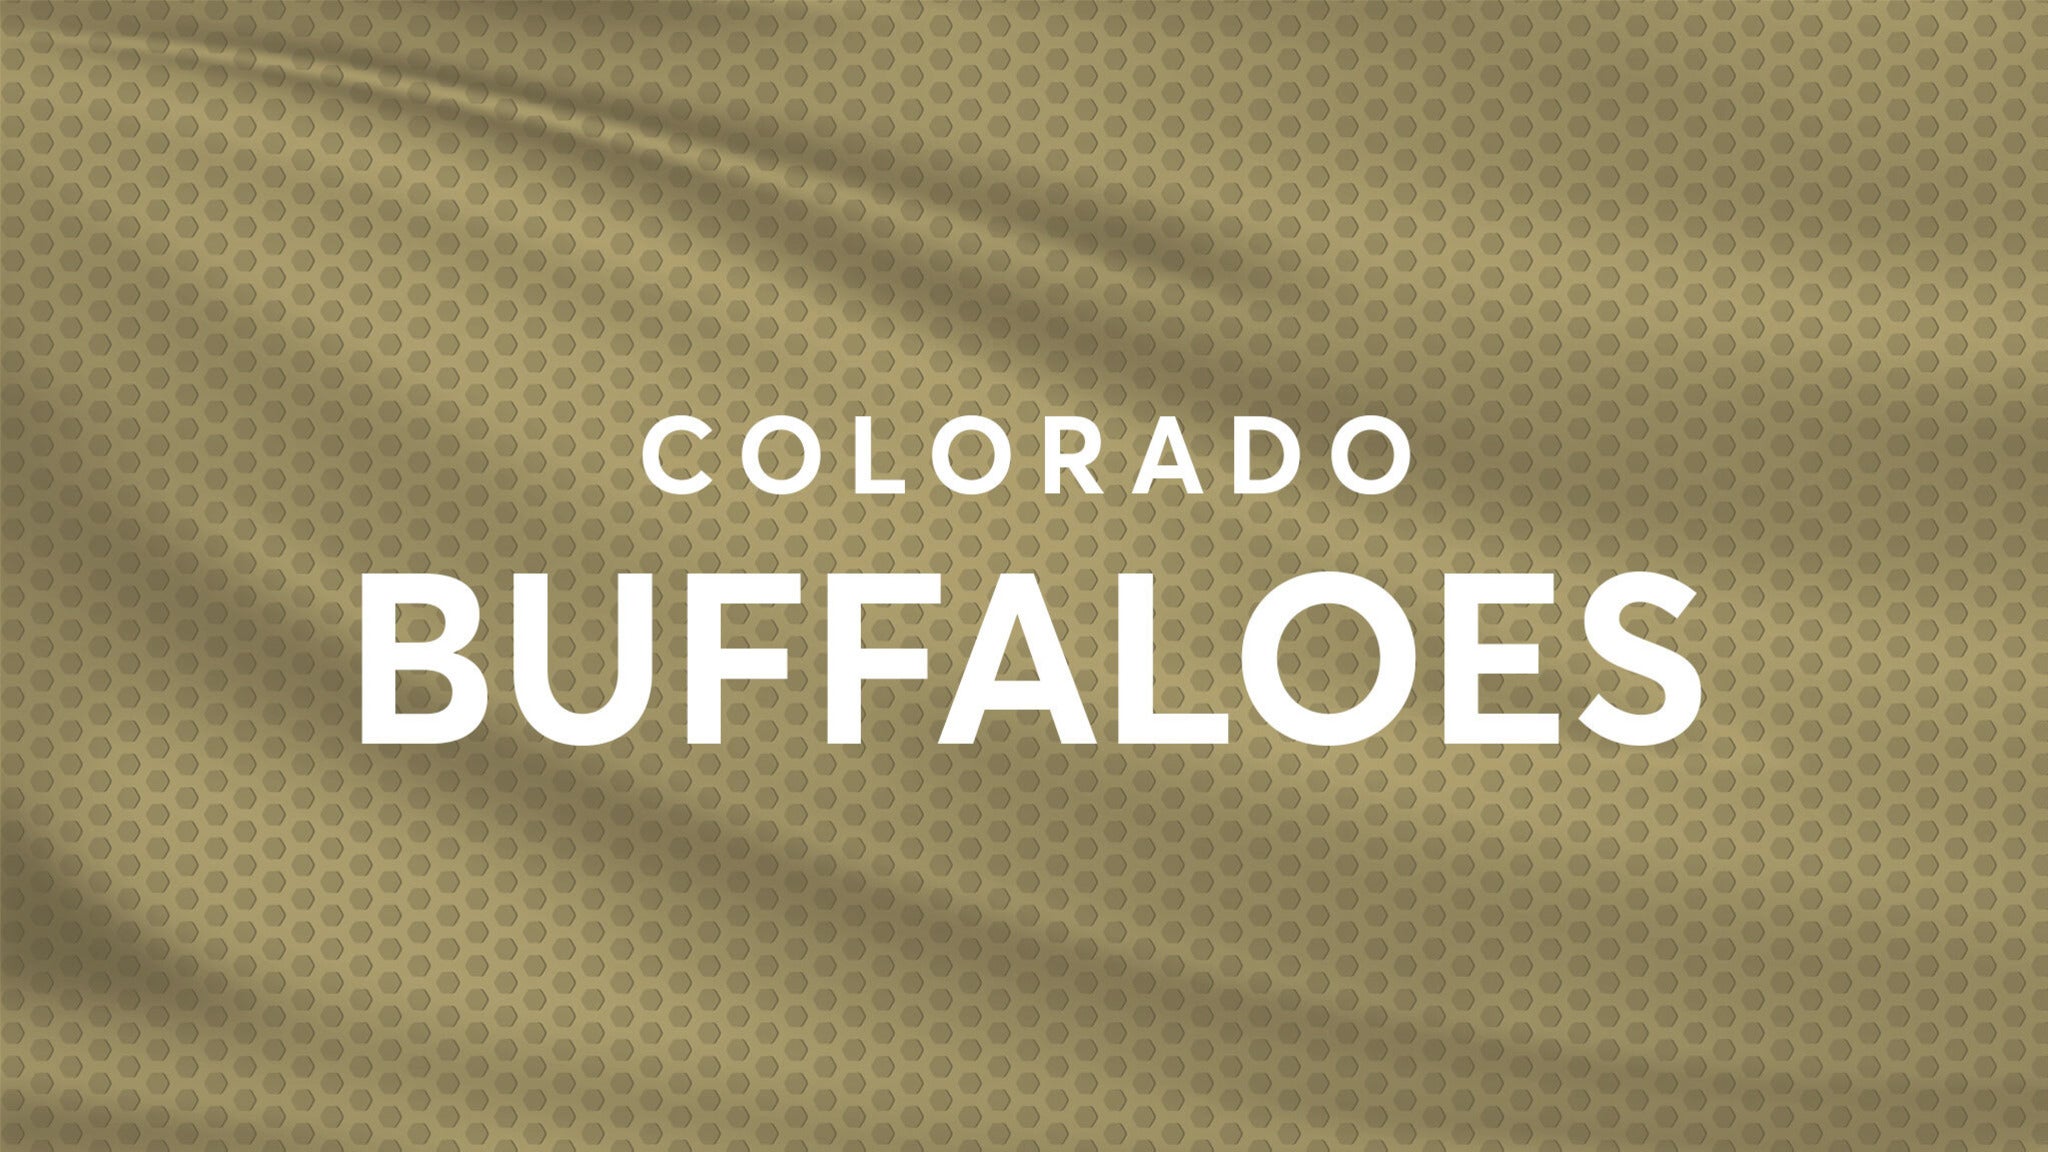 Colorado Buffaloes Football vs. Stanford Cardinal Football